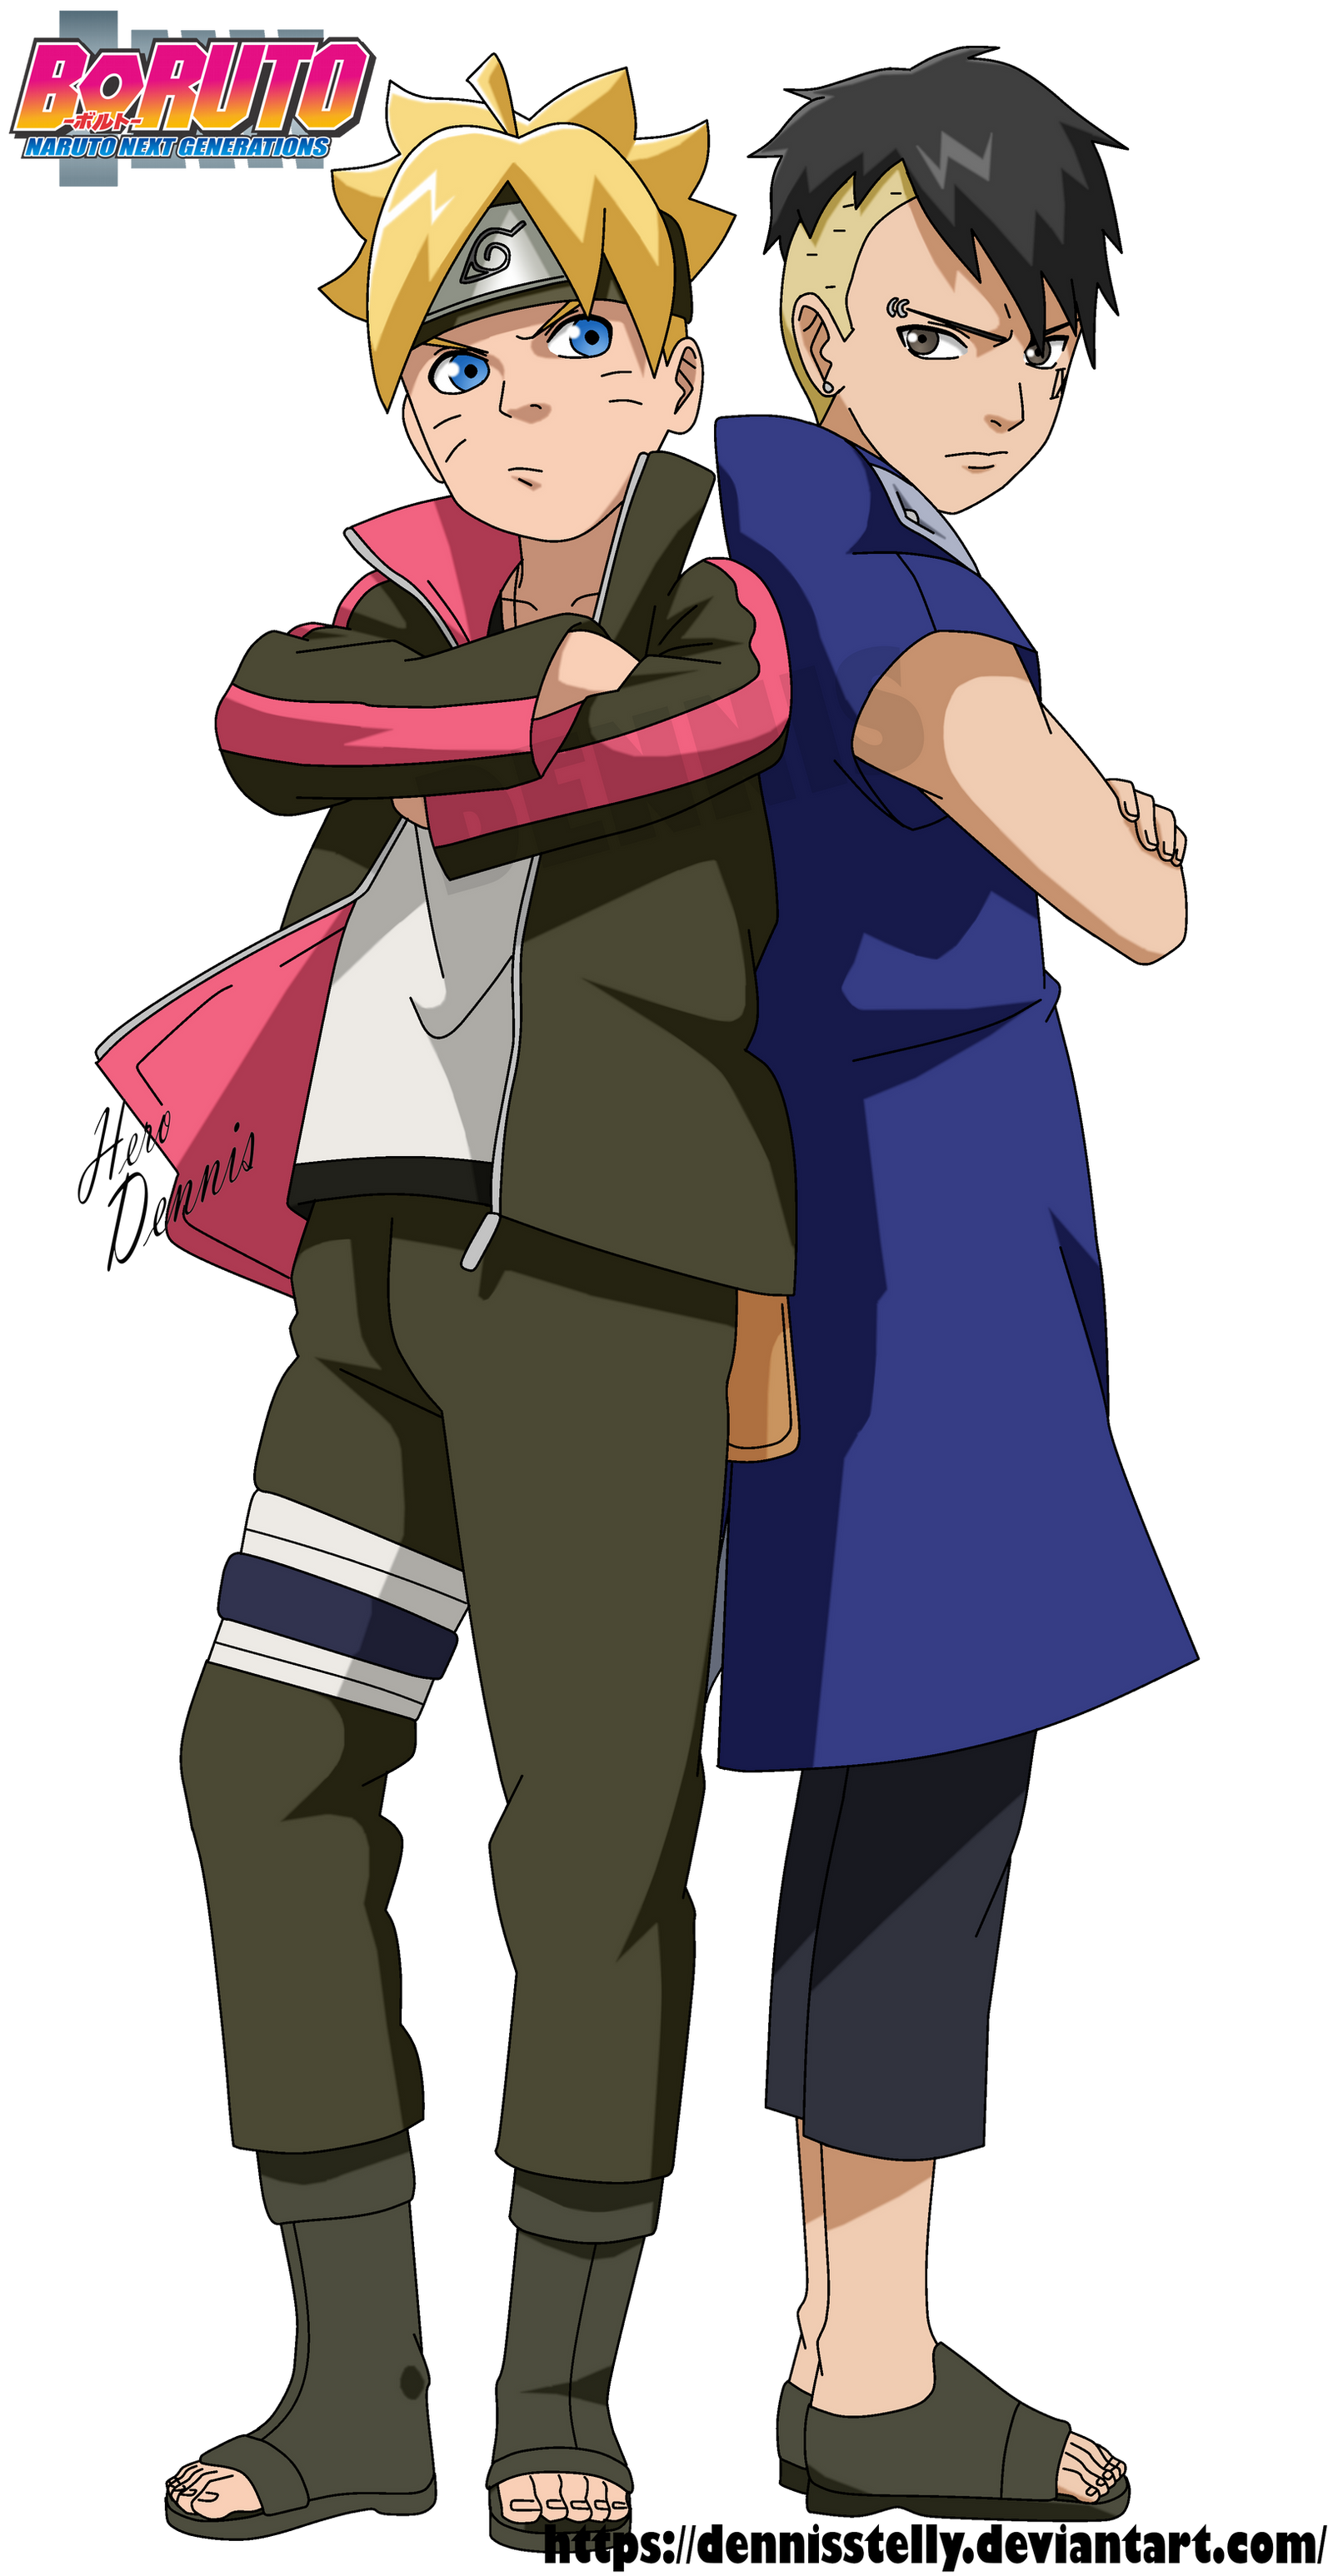 Boruto and Kawaki - Naruto Next Generation by DennisStelly on DeviantArt